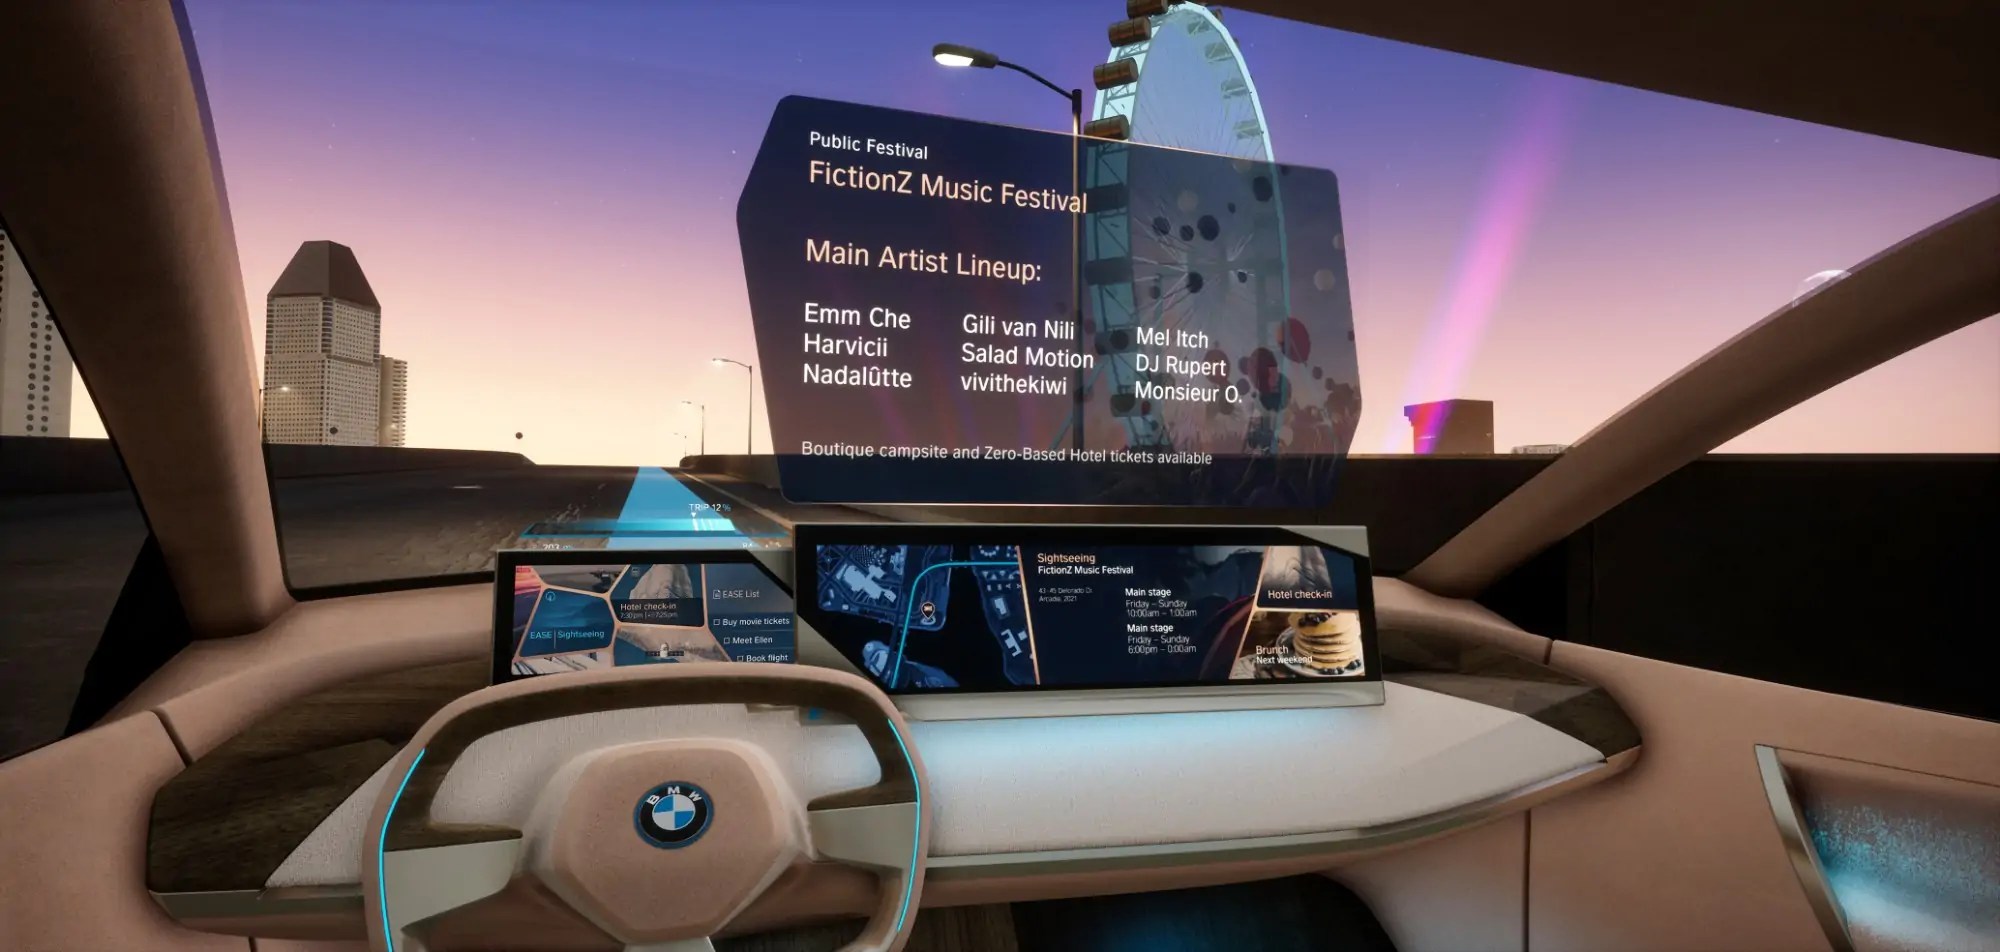 BMW تعرض افضل تقنياتها للمحاكاة التفاعلية في مؤتمر الجوالات العالمي 2019